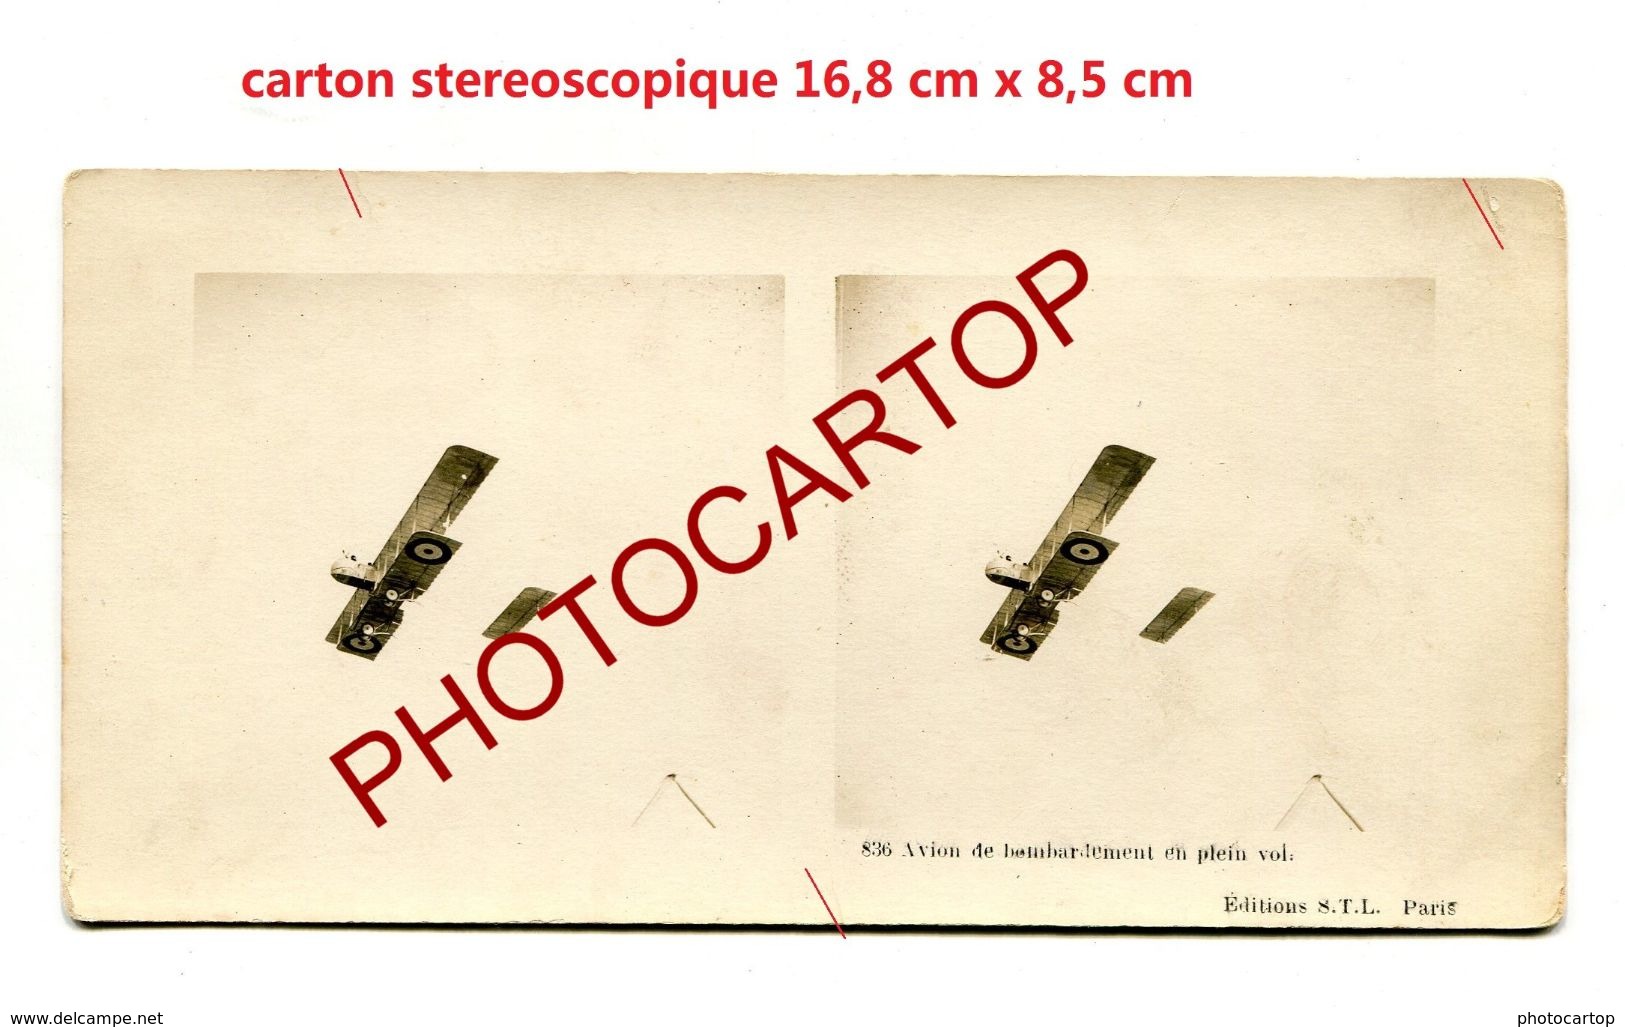 Bombardier-Avion-Aviation-Fliegerei-Carton Stereoscopique-Periode Guerre 14-18-1 WK-MILITARIA- - 1914-1918: 1. Weltkrieg